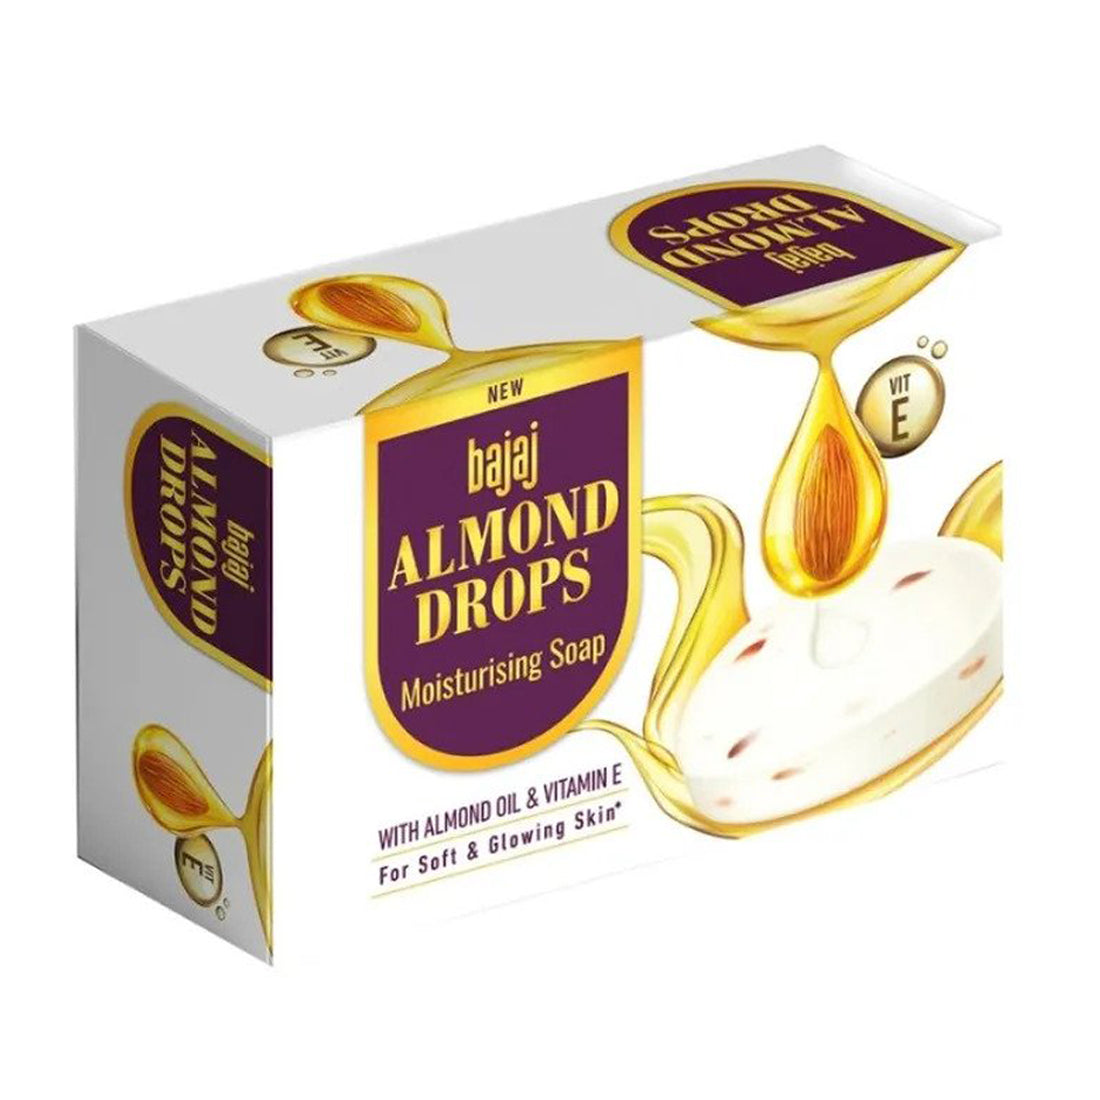 Bajaj Almond Drops Moisturising Soap With Almond Oil & Vitamin E 100gm